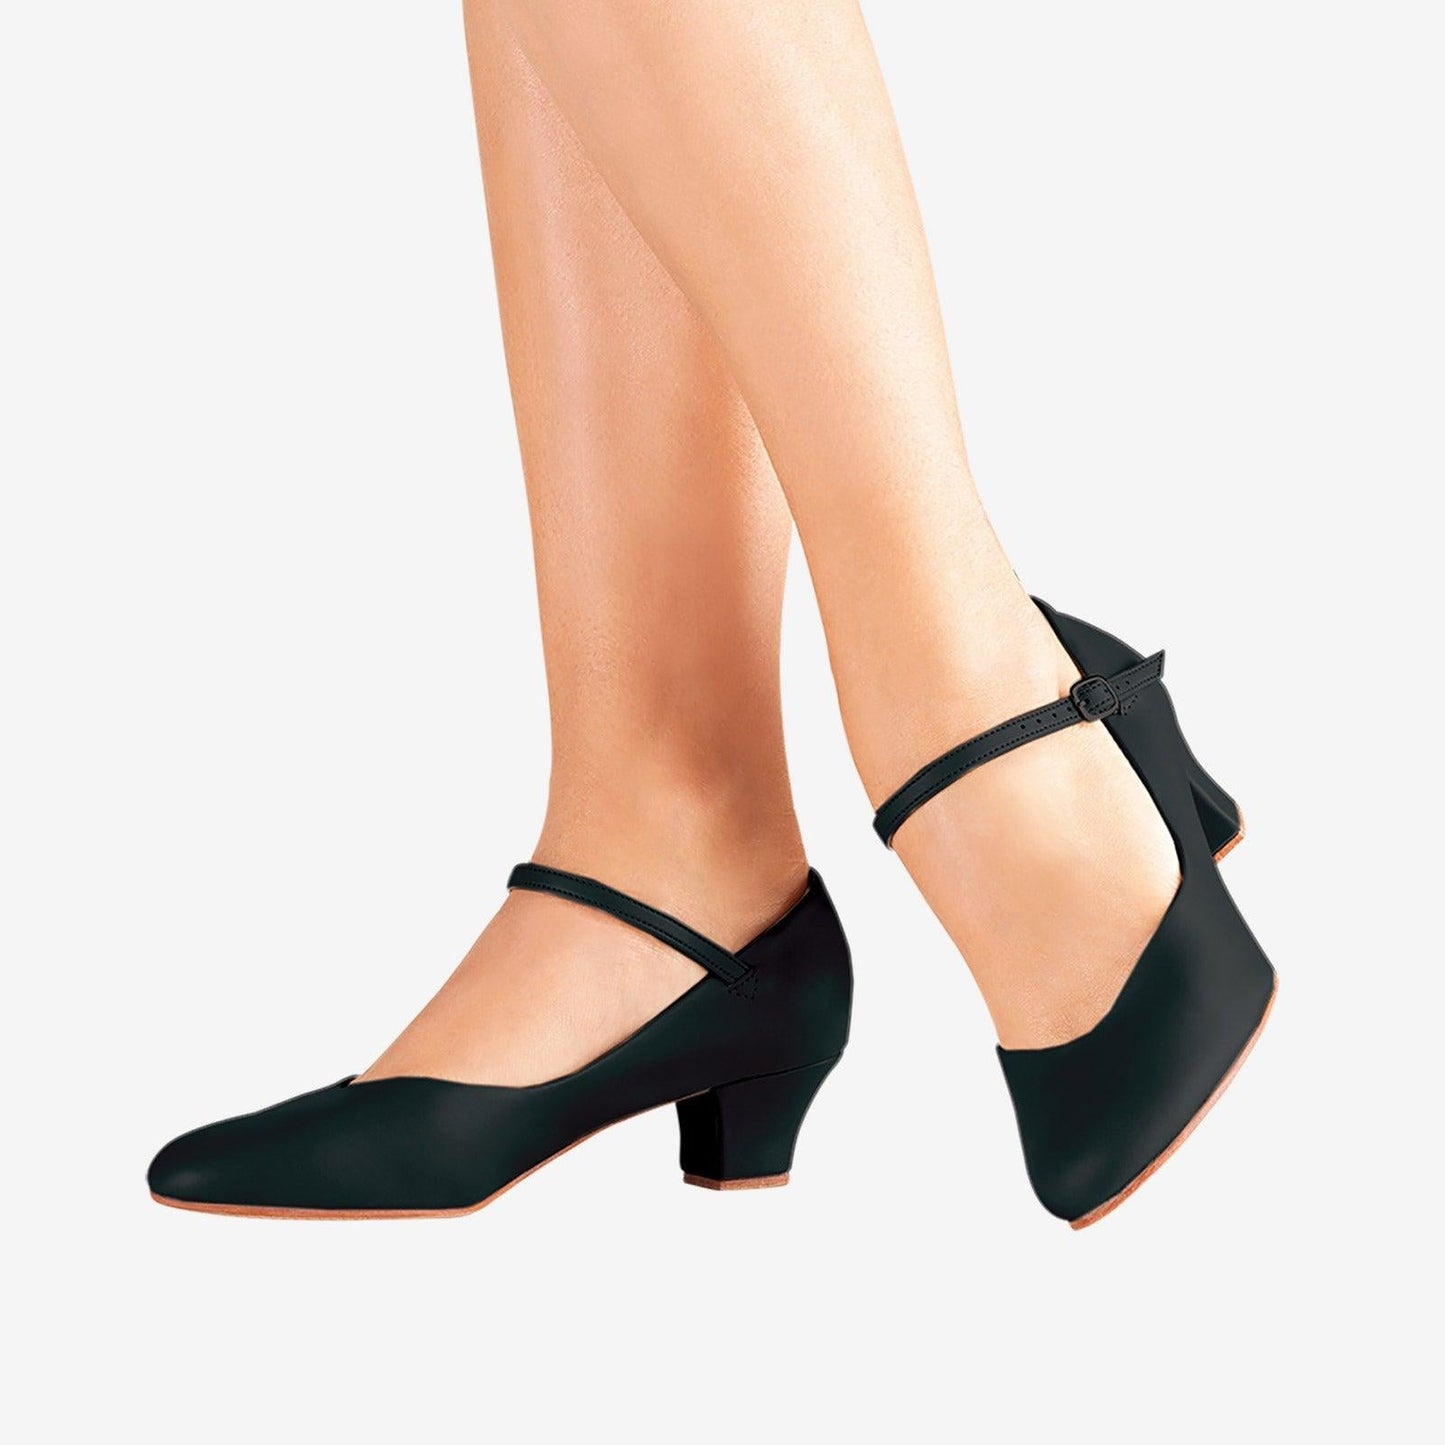 Celine Character Shoe - Black